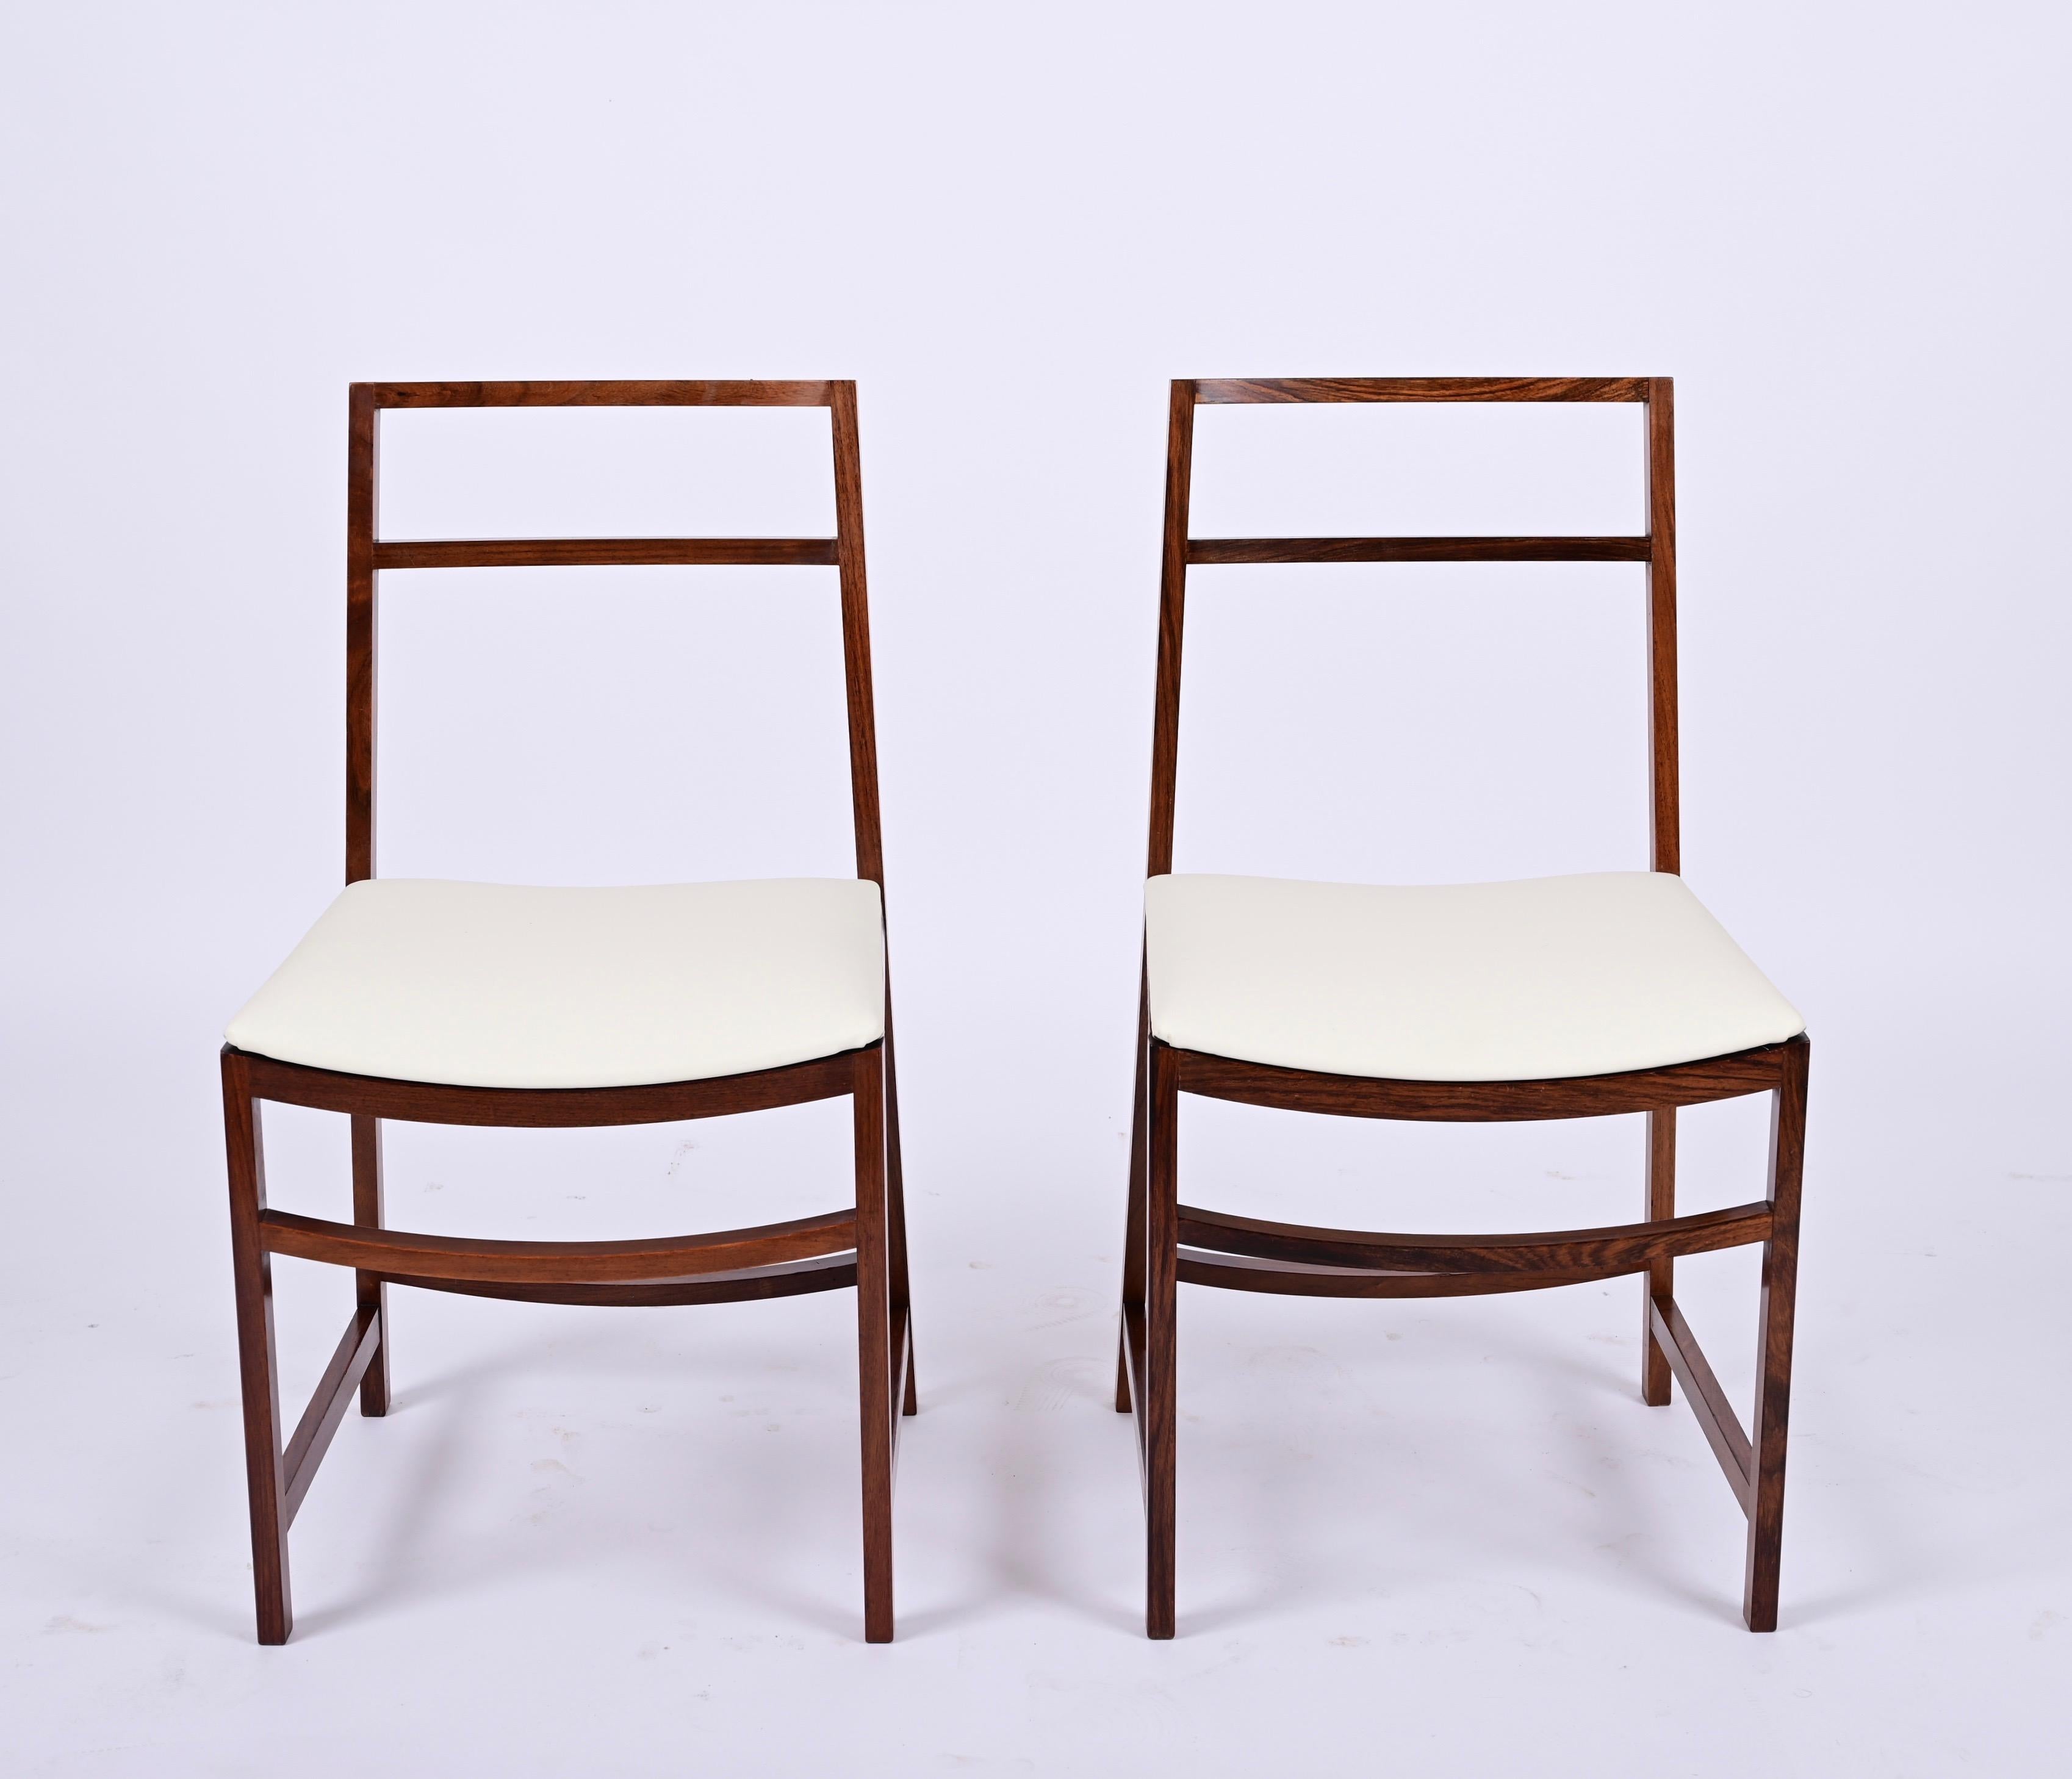 Midcentury Italian Dining Chairs in Teak, Renato Venturi for MIM Roma, 1960s For Sale 6